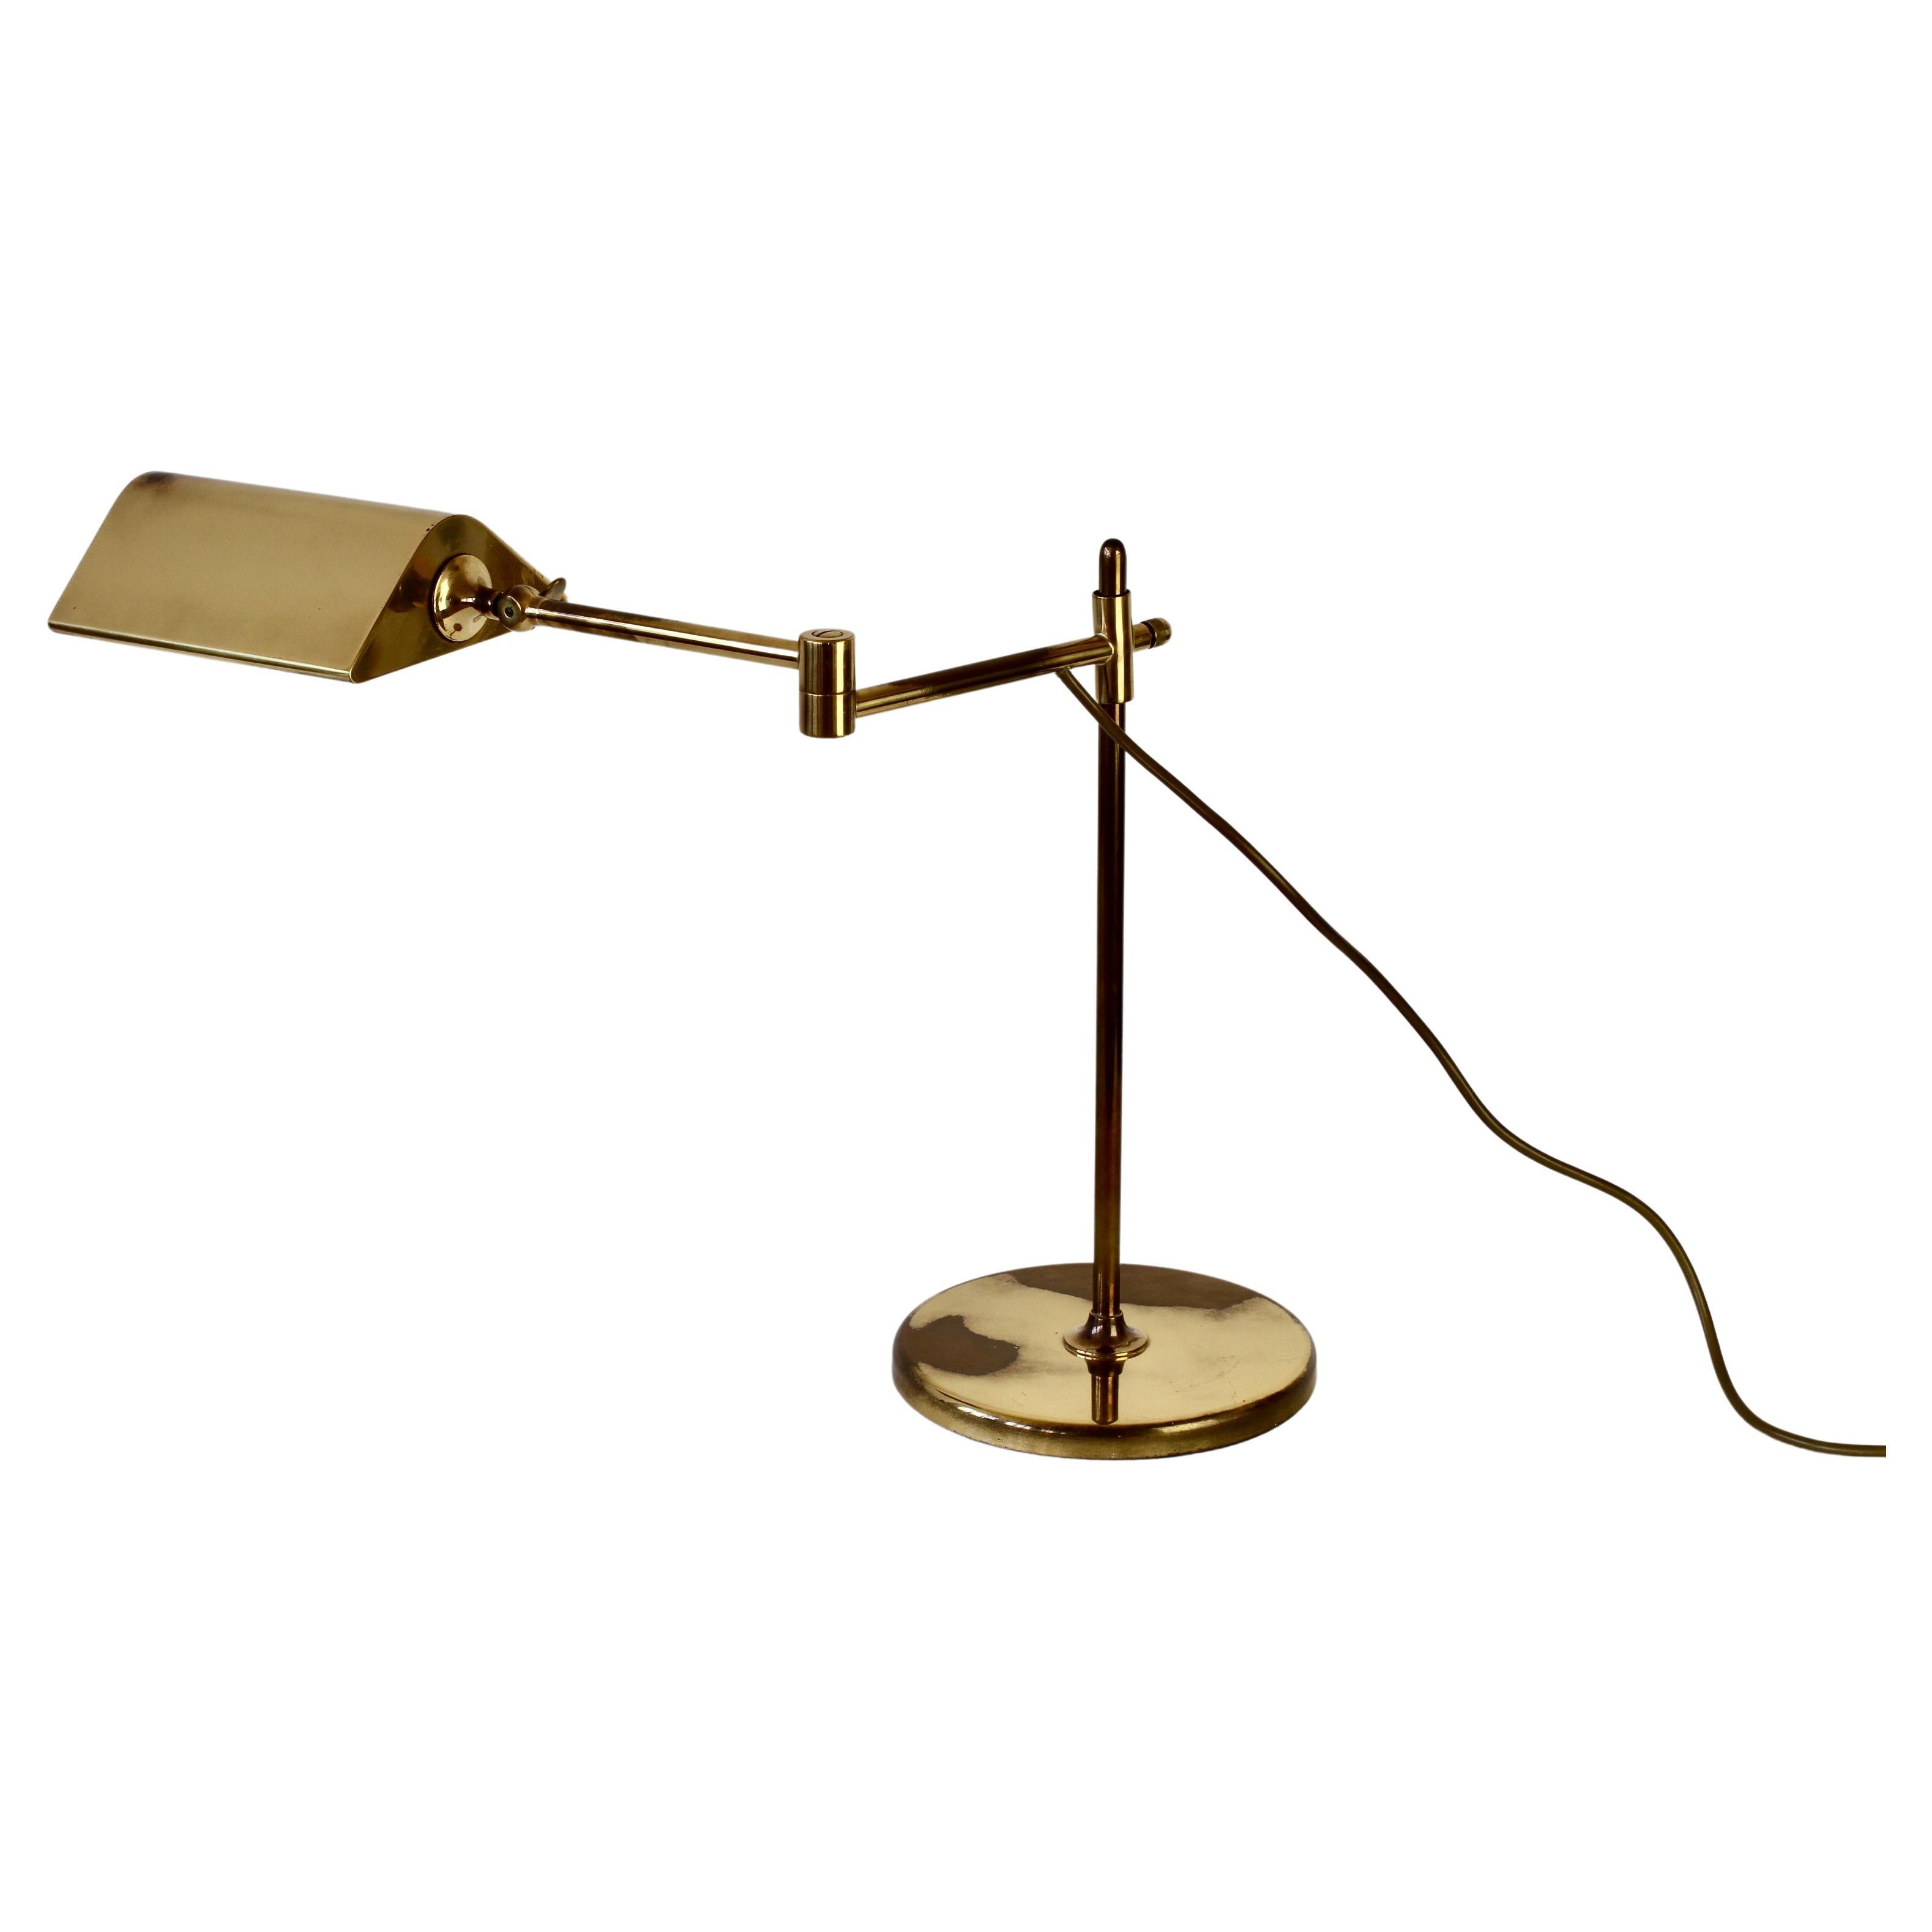 Florian Schulz Mid-Century Vintage Modernist Brass Adjustable Table Lamp c.1970 For Sale